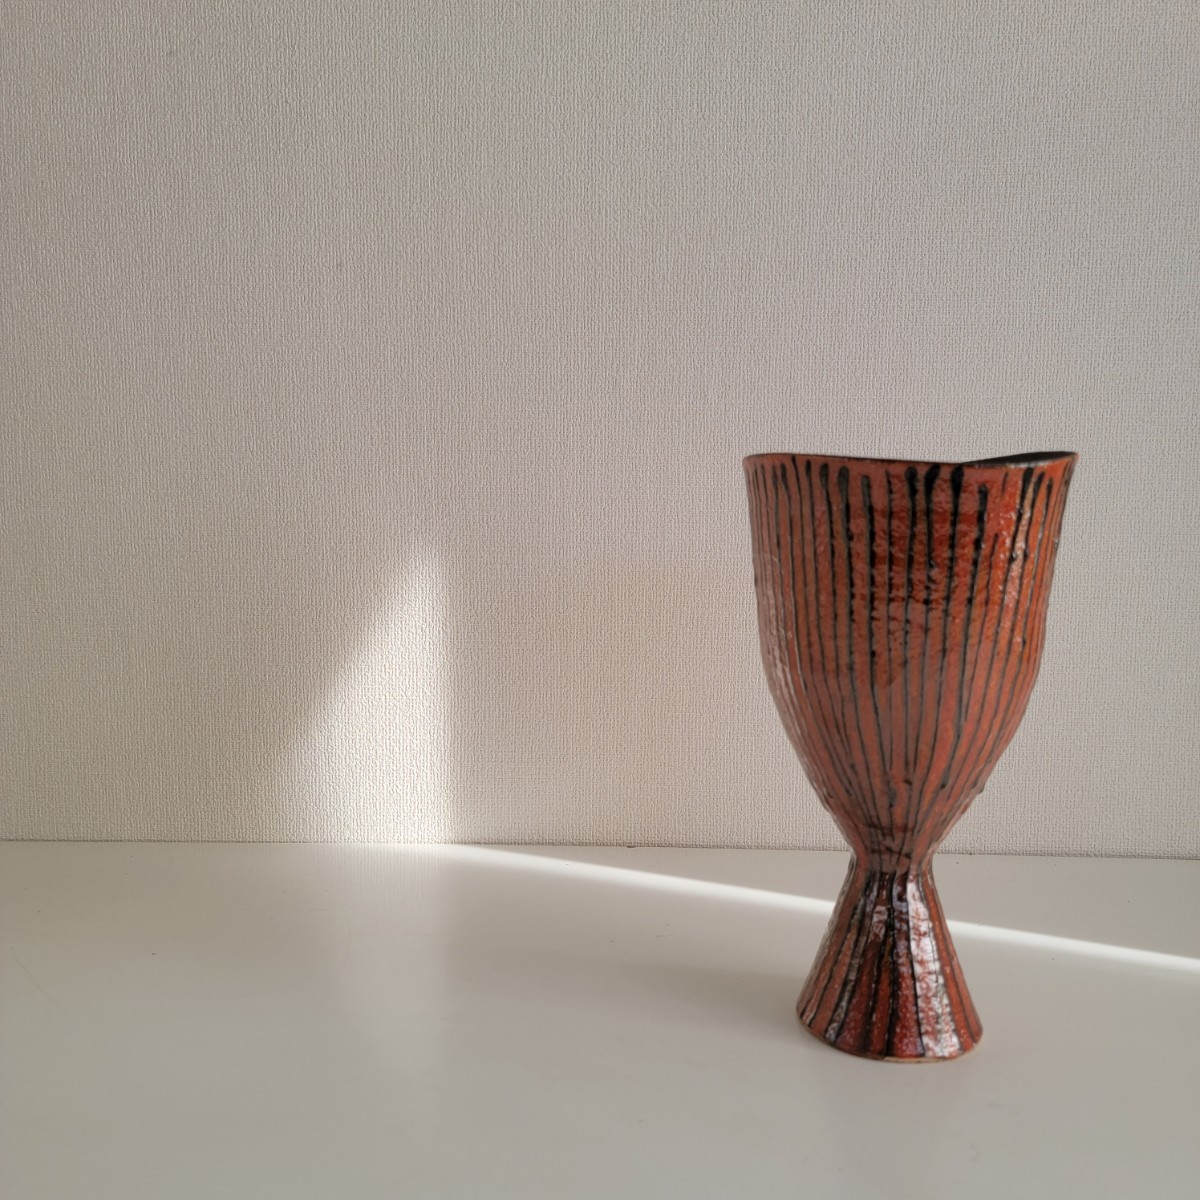 Japanese Vintage Flower Vase モダン 北欧 ミッドセンチュリー ヴィンテージ デザイン フラワーベース 花瓶 花器 置物 インテリア 1391V_画像4